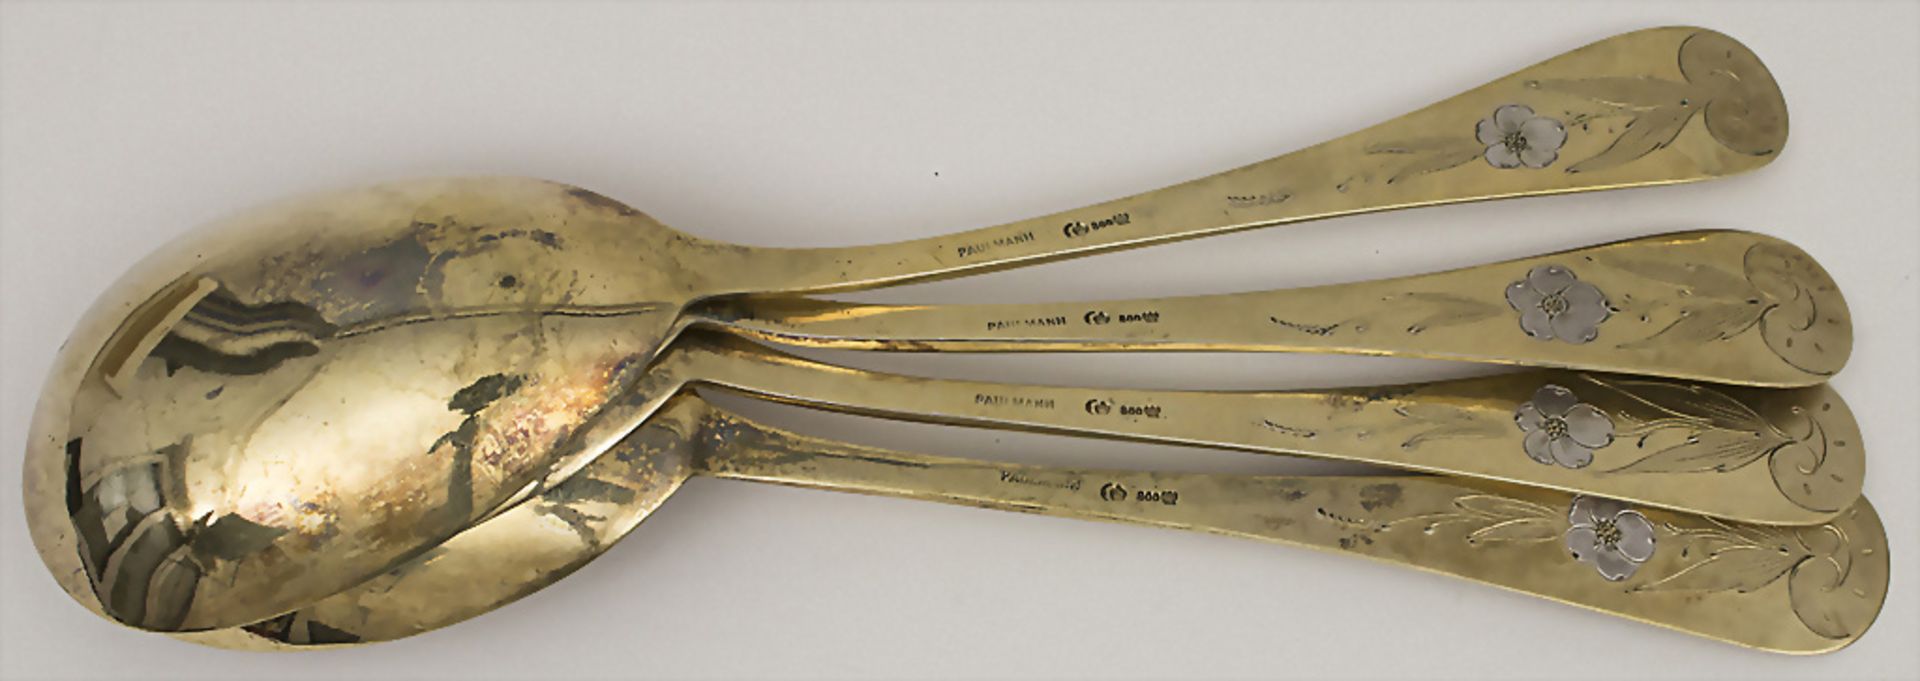 Vorlegebesteck im Etui / 4 serving spoons in a box, Bruckmann & Söhne, Heilbronn, um 1900 - Image 3 of 4